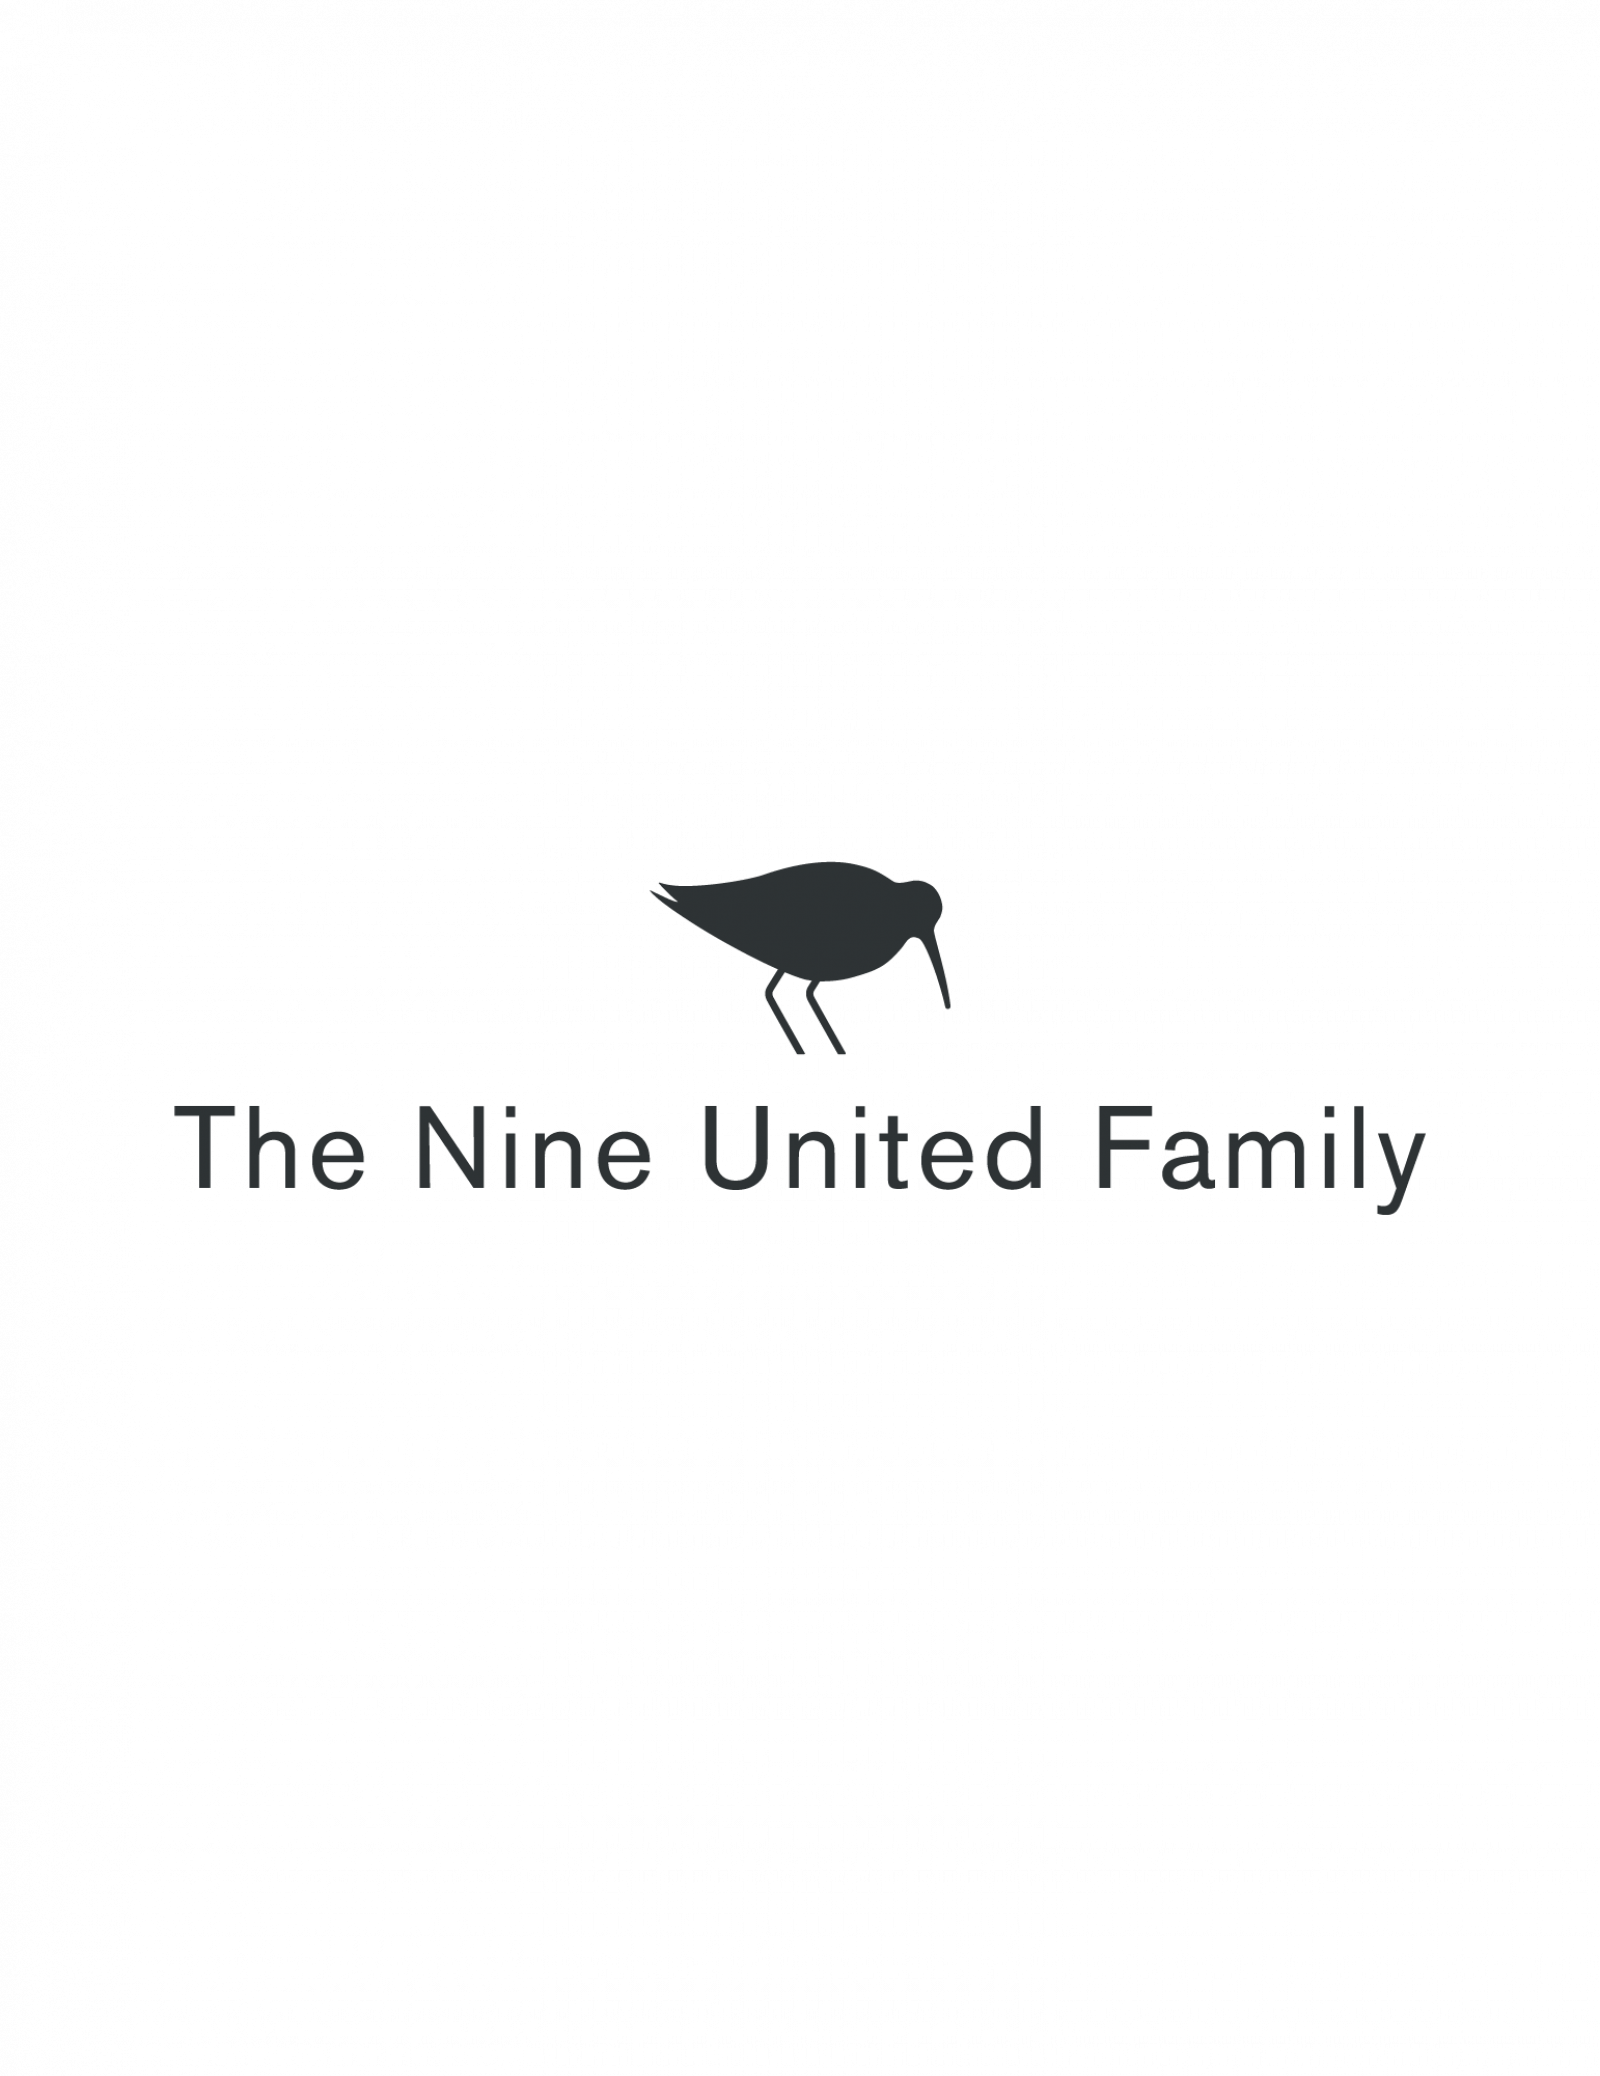 Nine United is a shared spirit